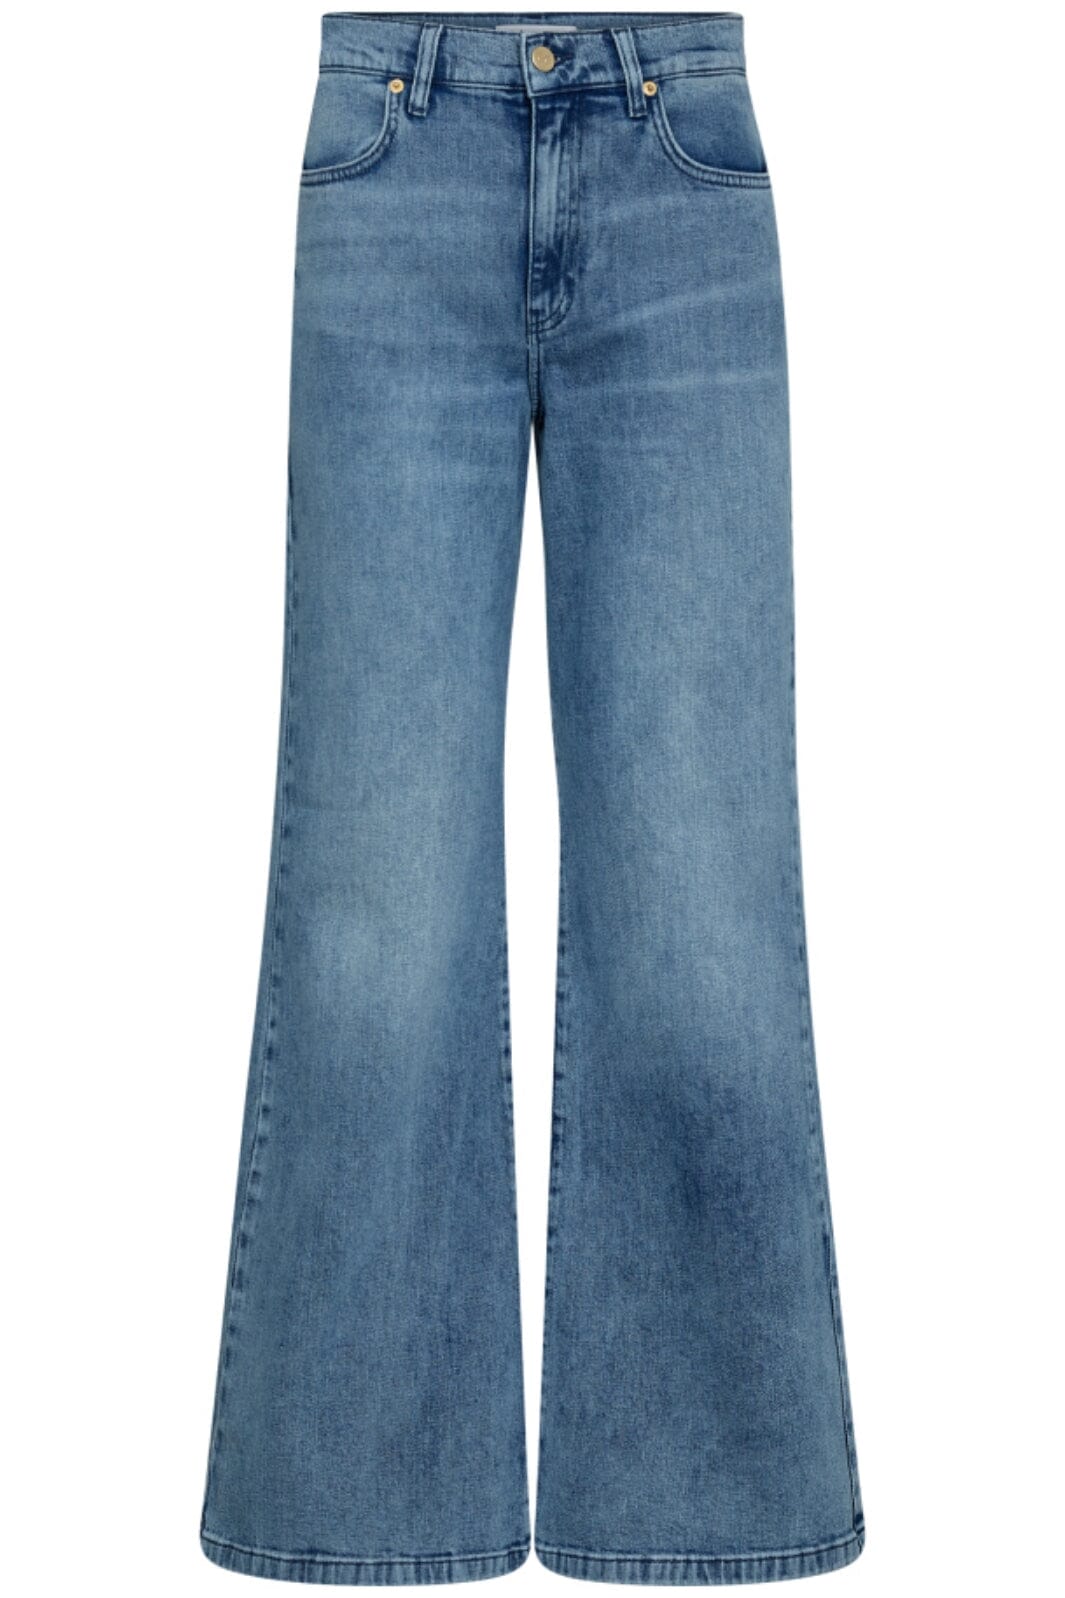 Co´couture - Dorycc Bleach Jeans 31269 - 544 Used Denim Bukser 